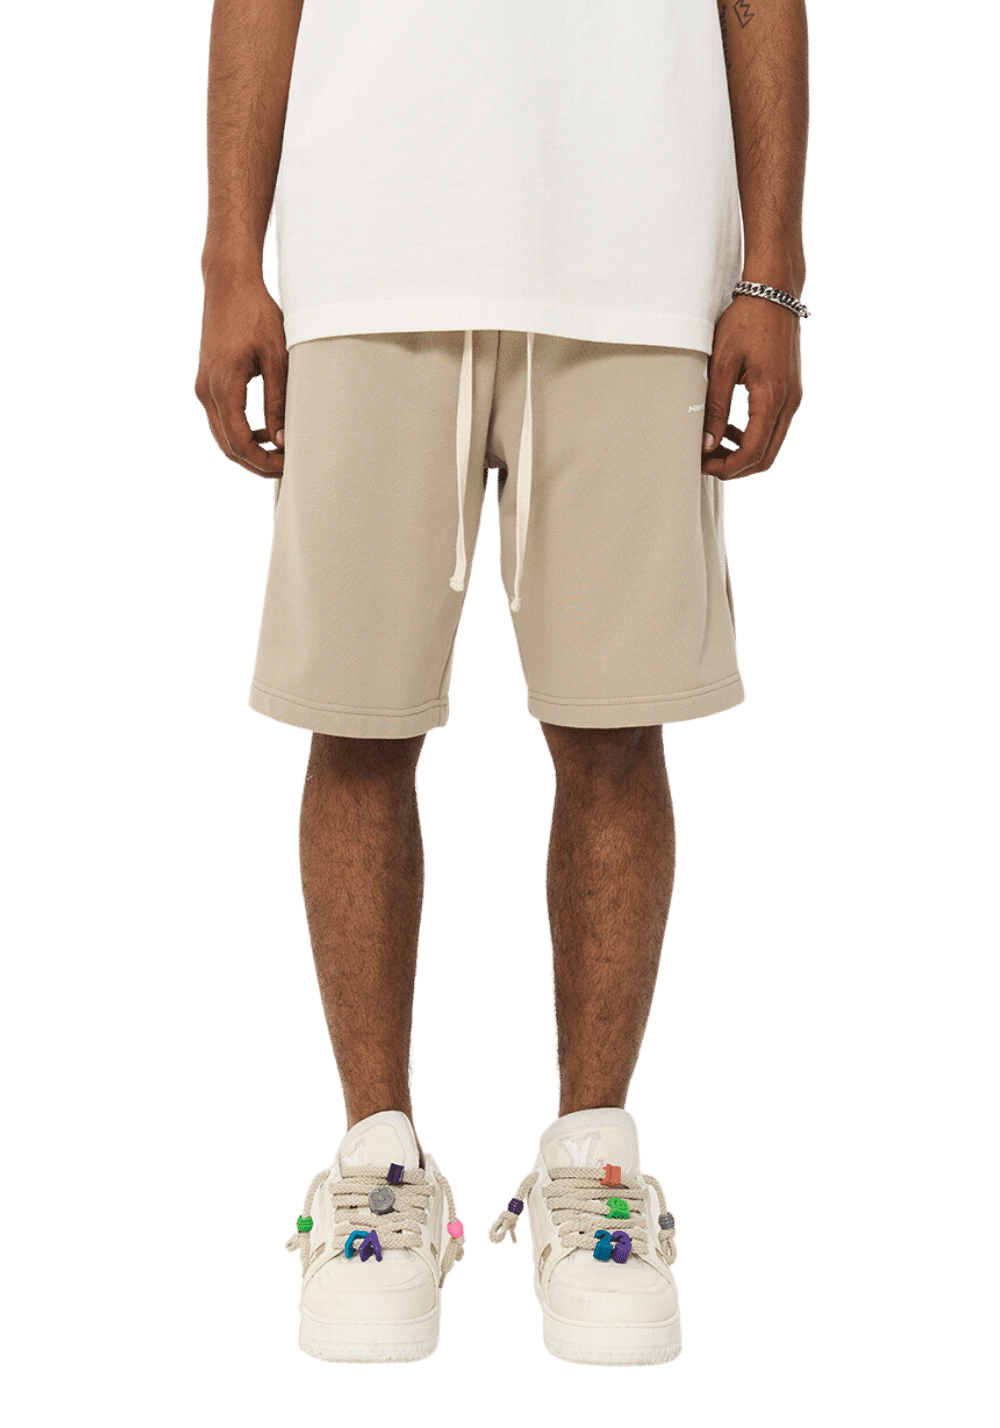 Zipper Adjustable Track Shorts - PSYLOS 1, Zipper Adjustable Track Shorts, Shorts, HARSH AND CRUEL, PSYLOS 1